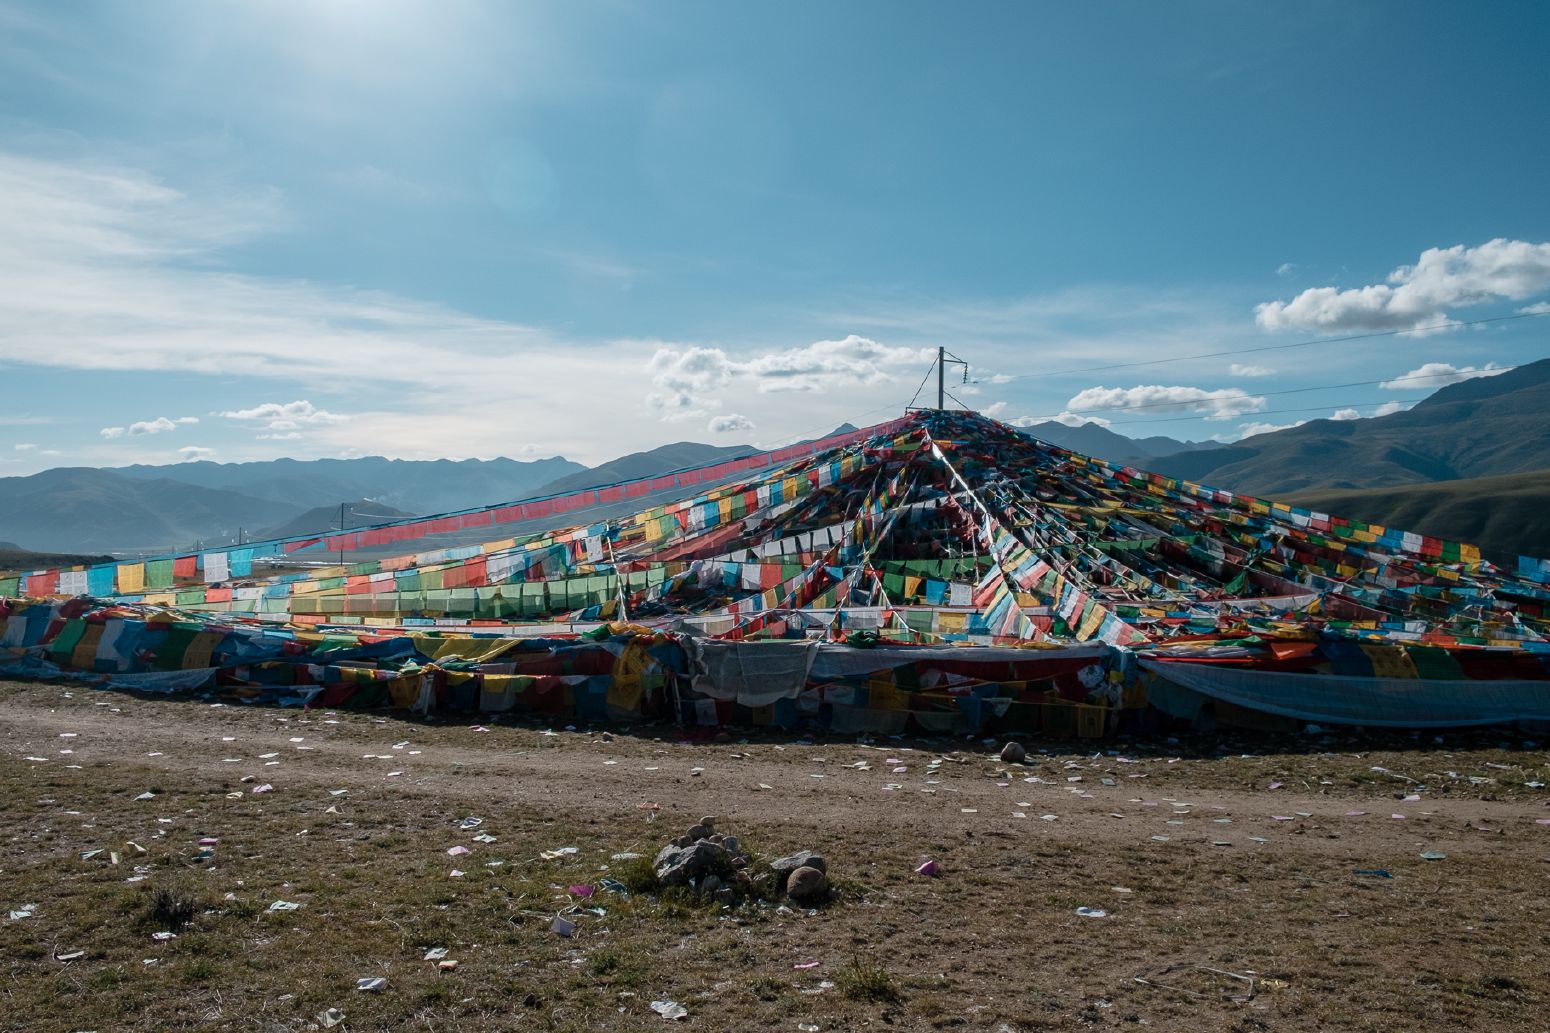 Lake Namtso. Trip to lake Namtso, Tibet, China. August 2013